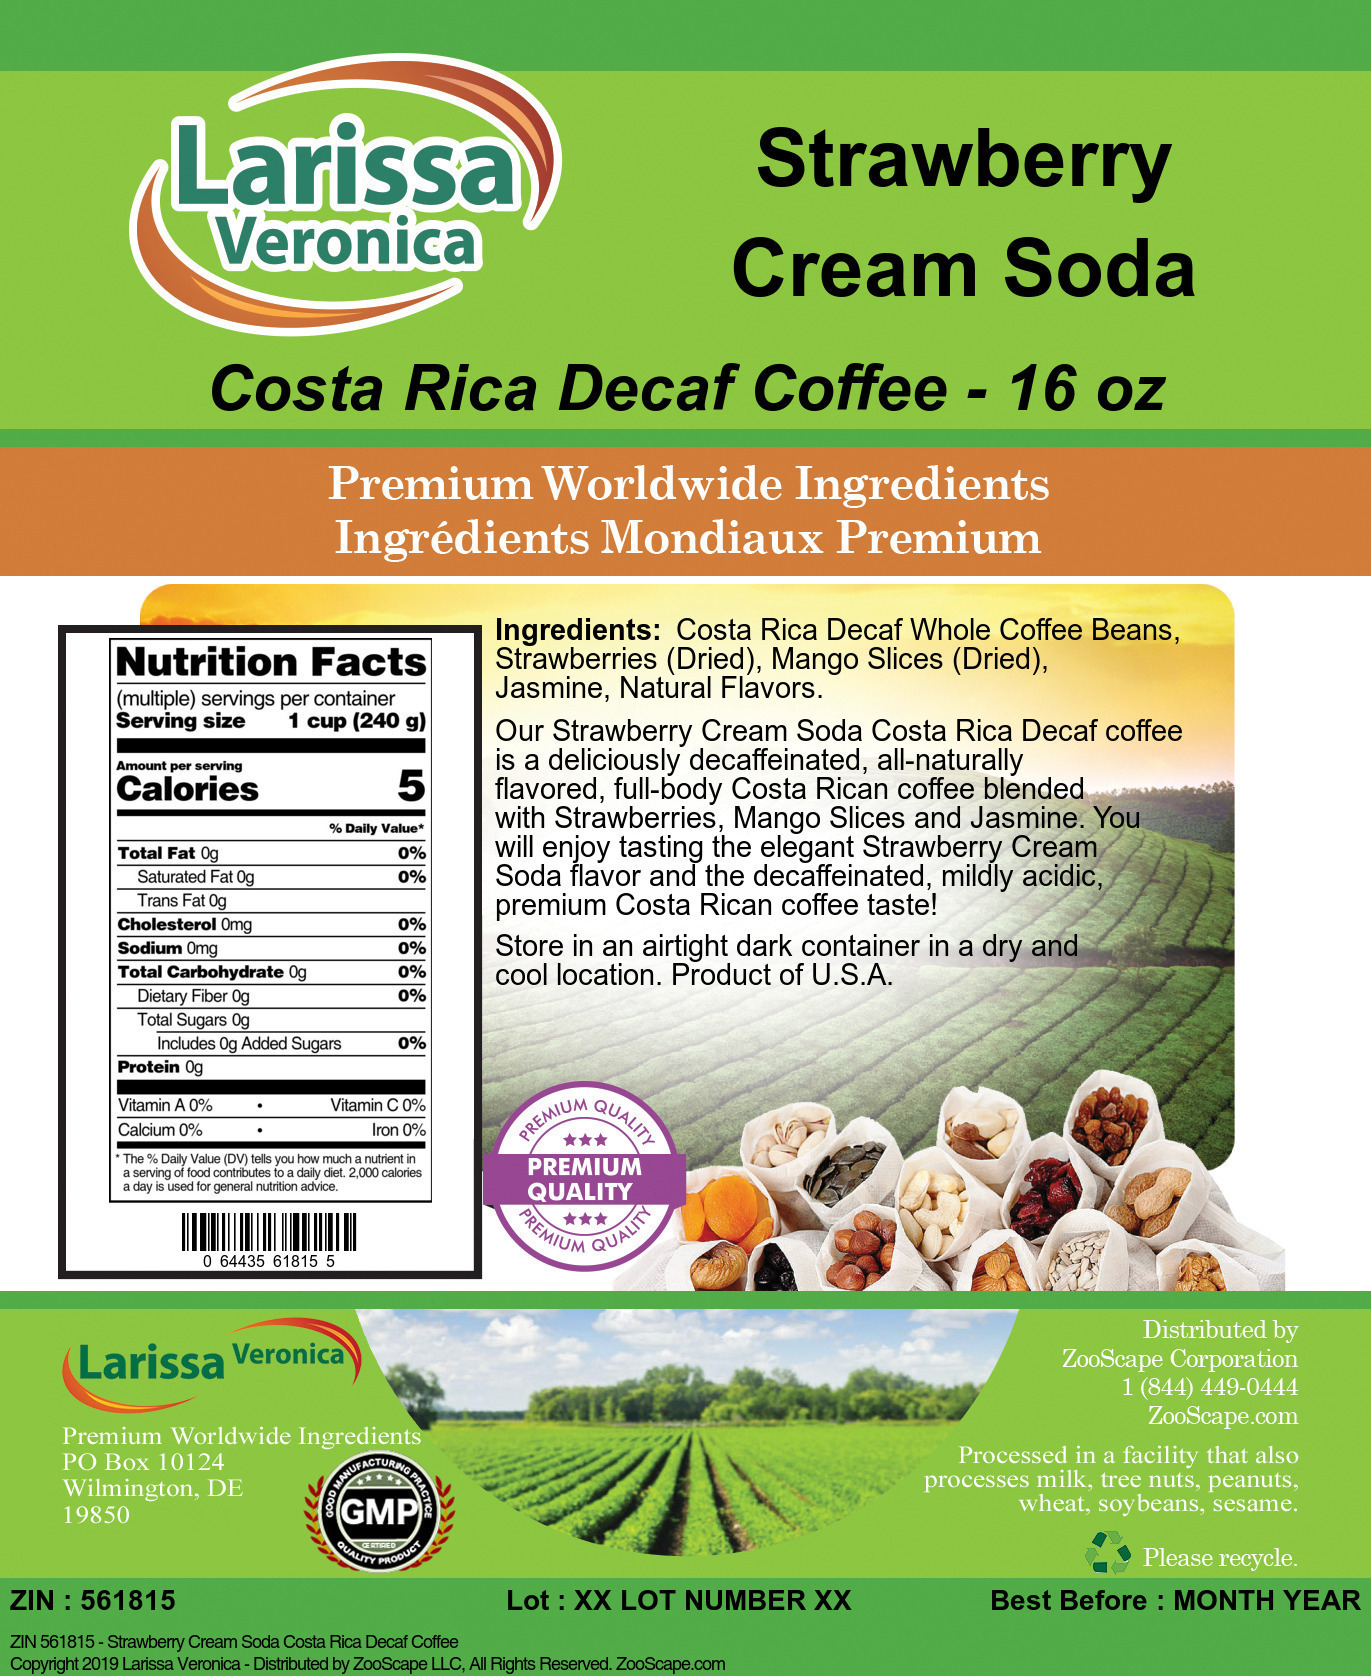 Strawberry Cream Soda Costa Rica Decaf Coffee - Label